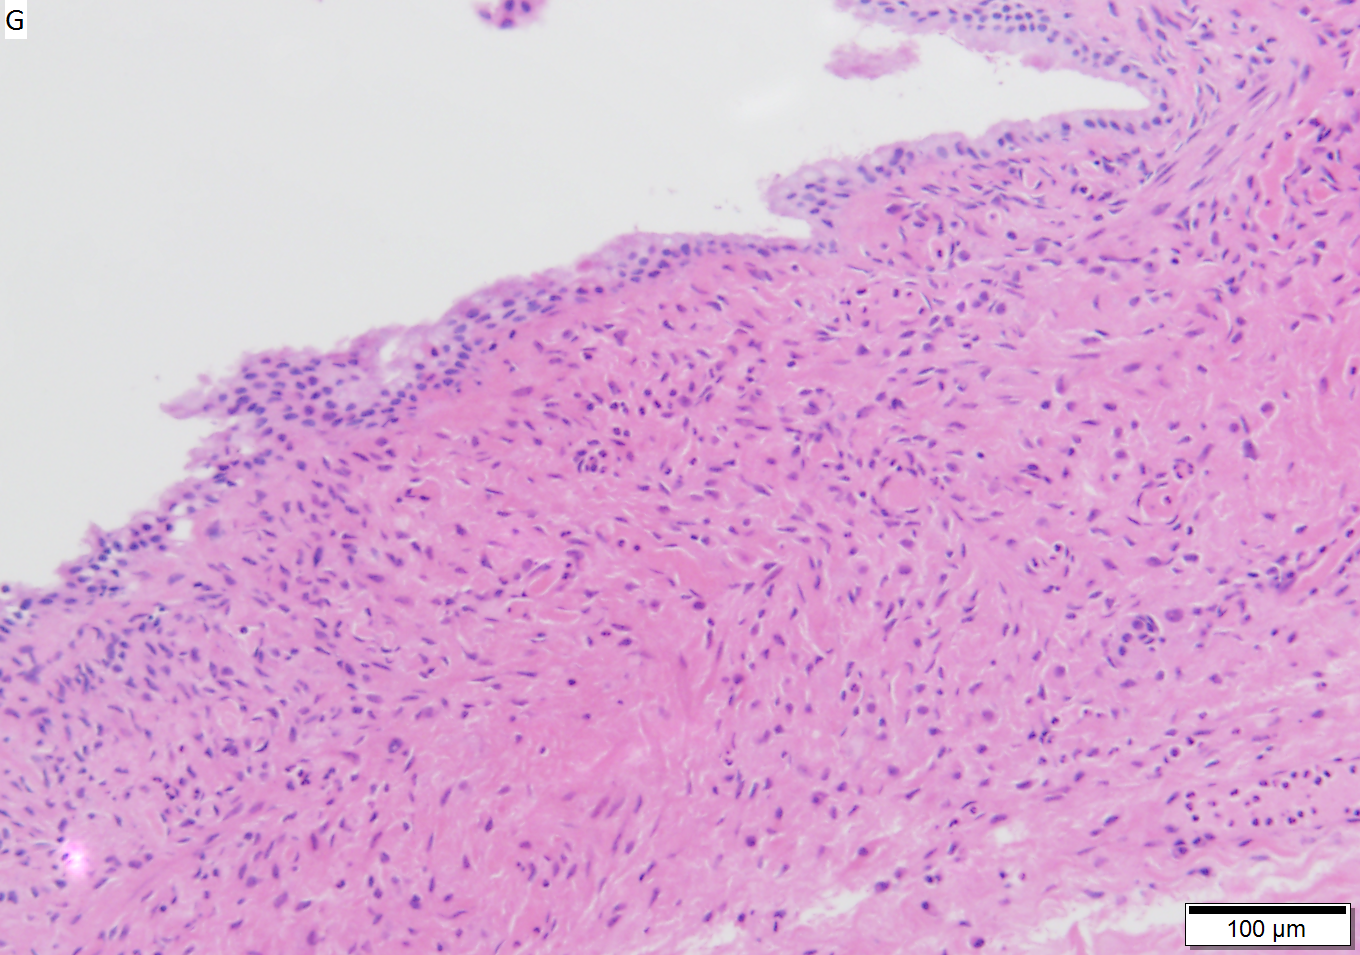 Mucinous cystic neoplasm of pancreas